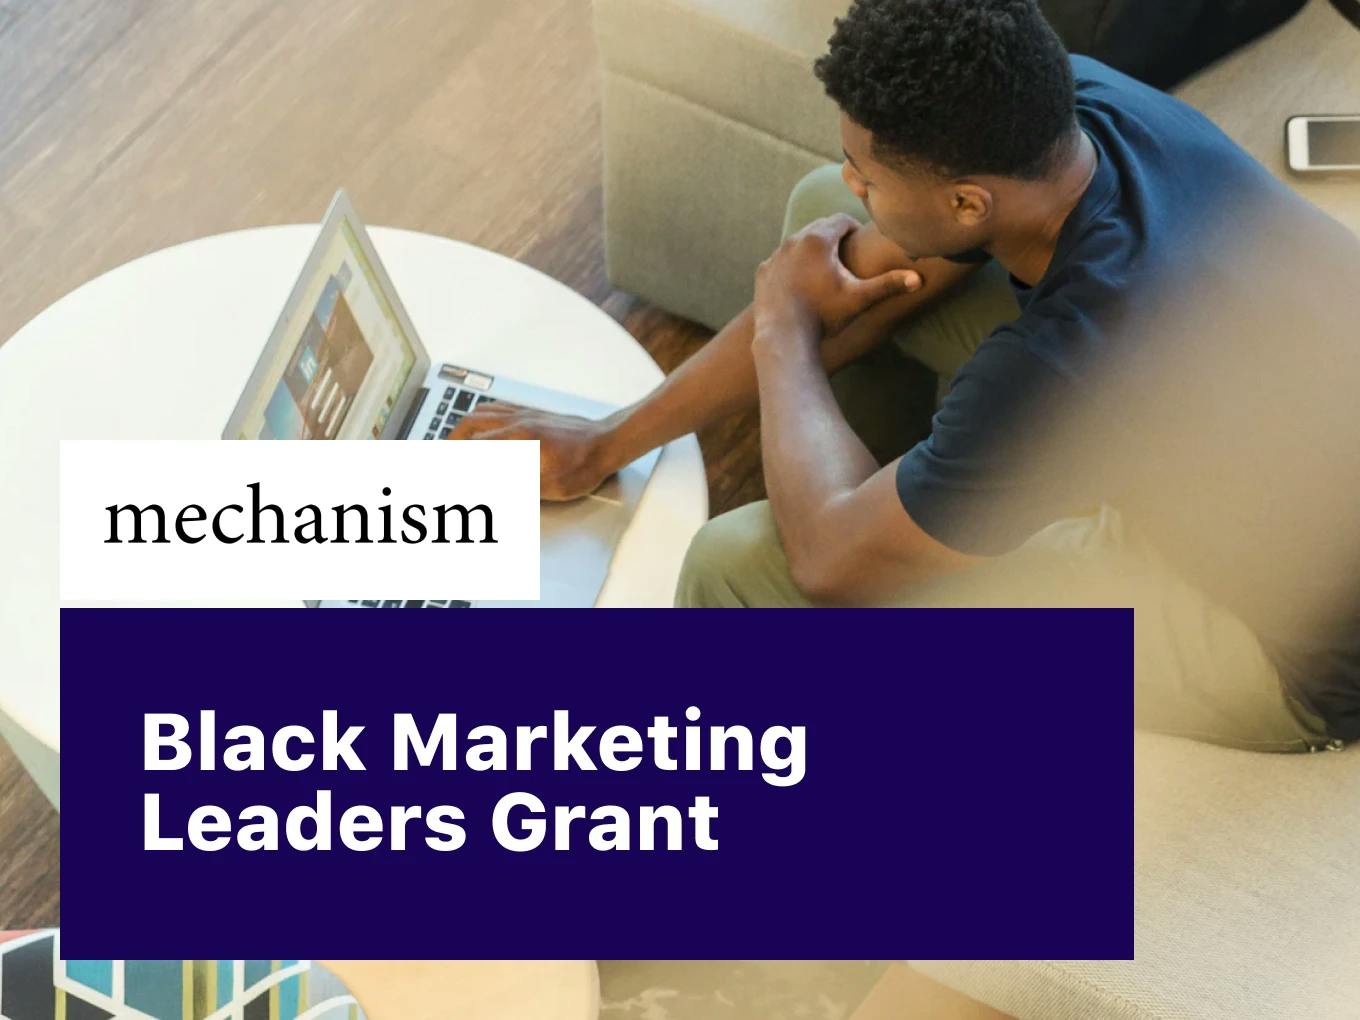 Black Marketing Leaders Grant